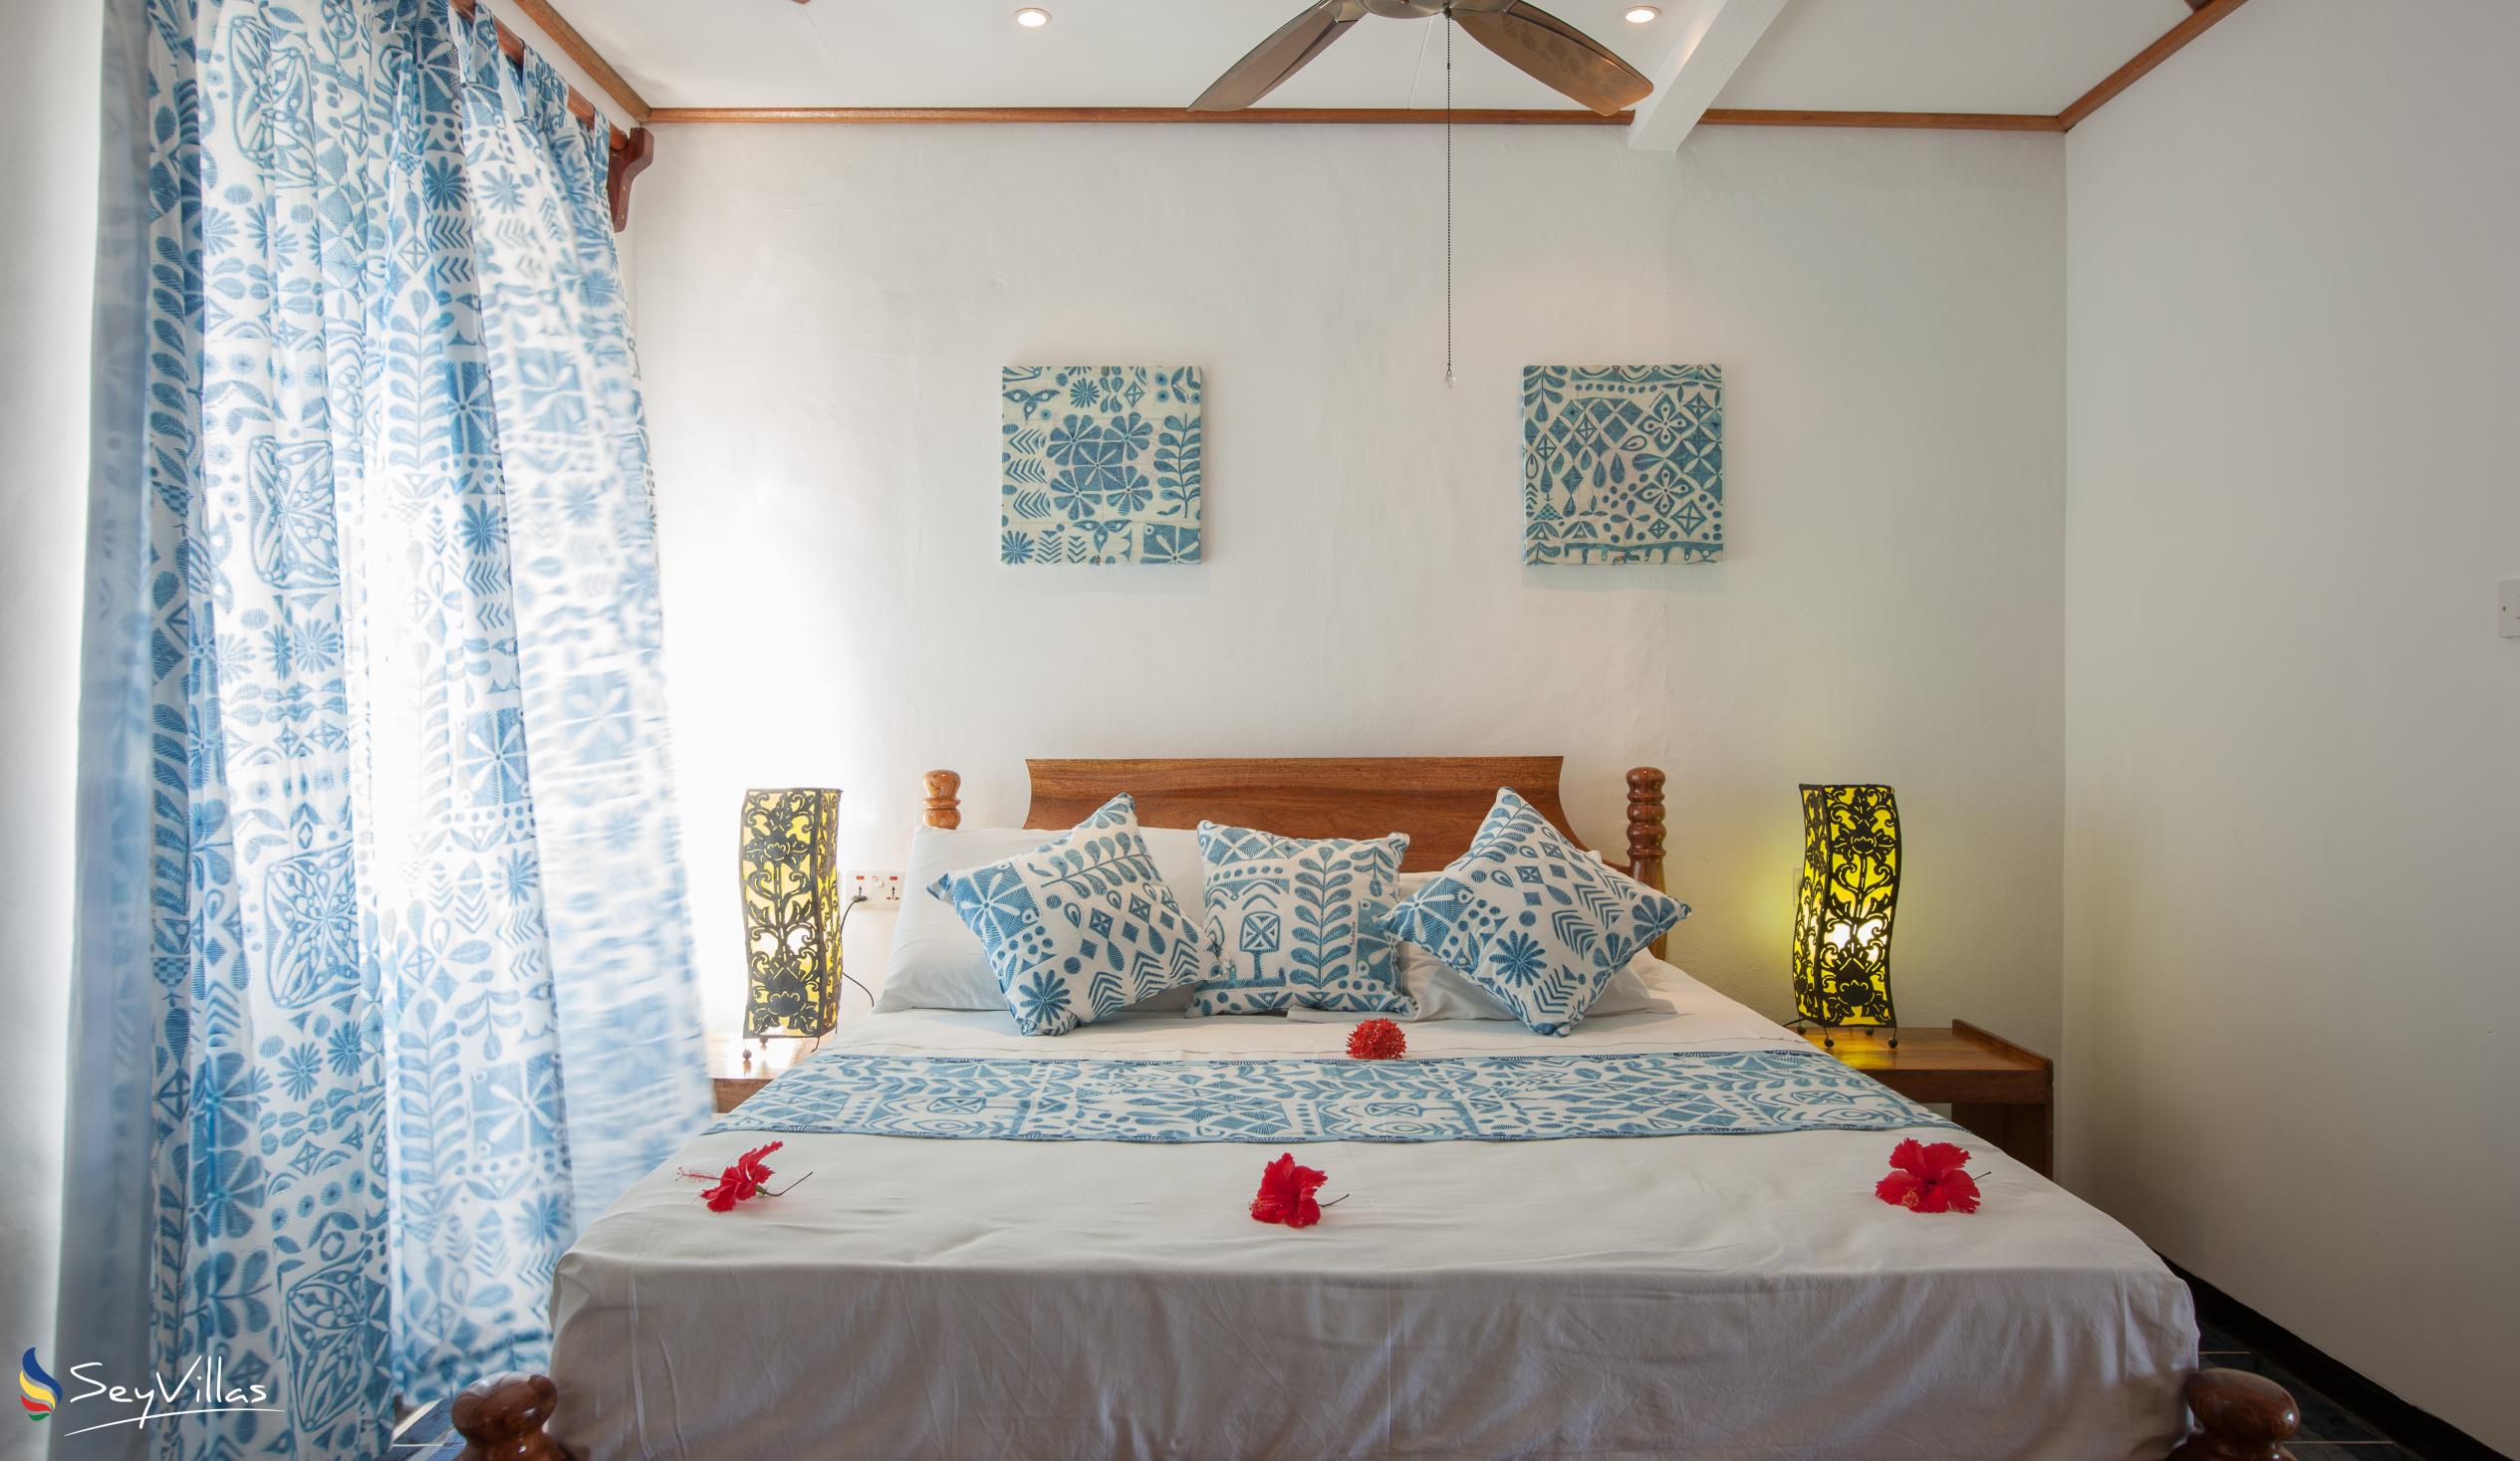 Photo 48: Sea View Lodge - Big Villa - Praslin (Seychelles)